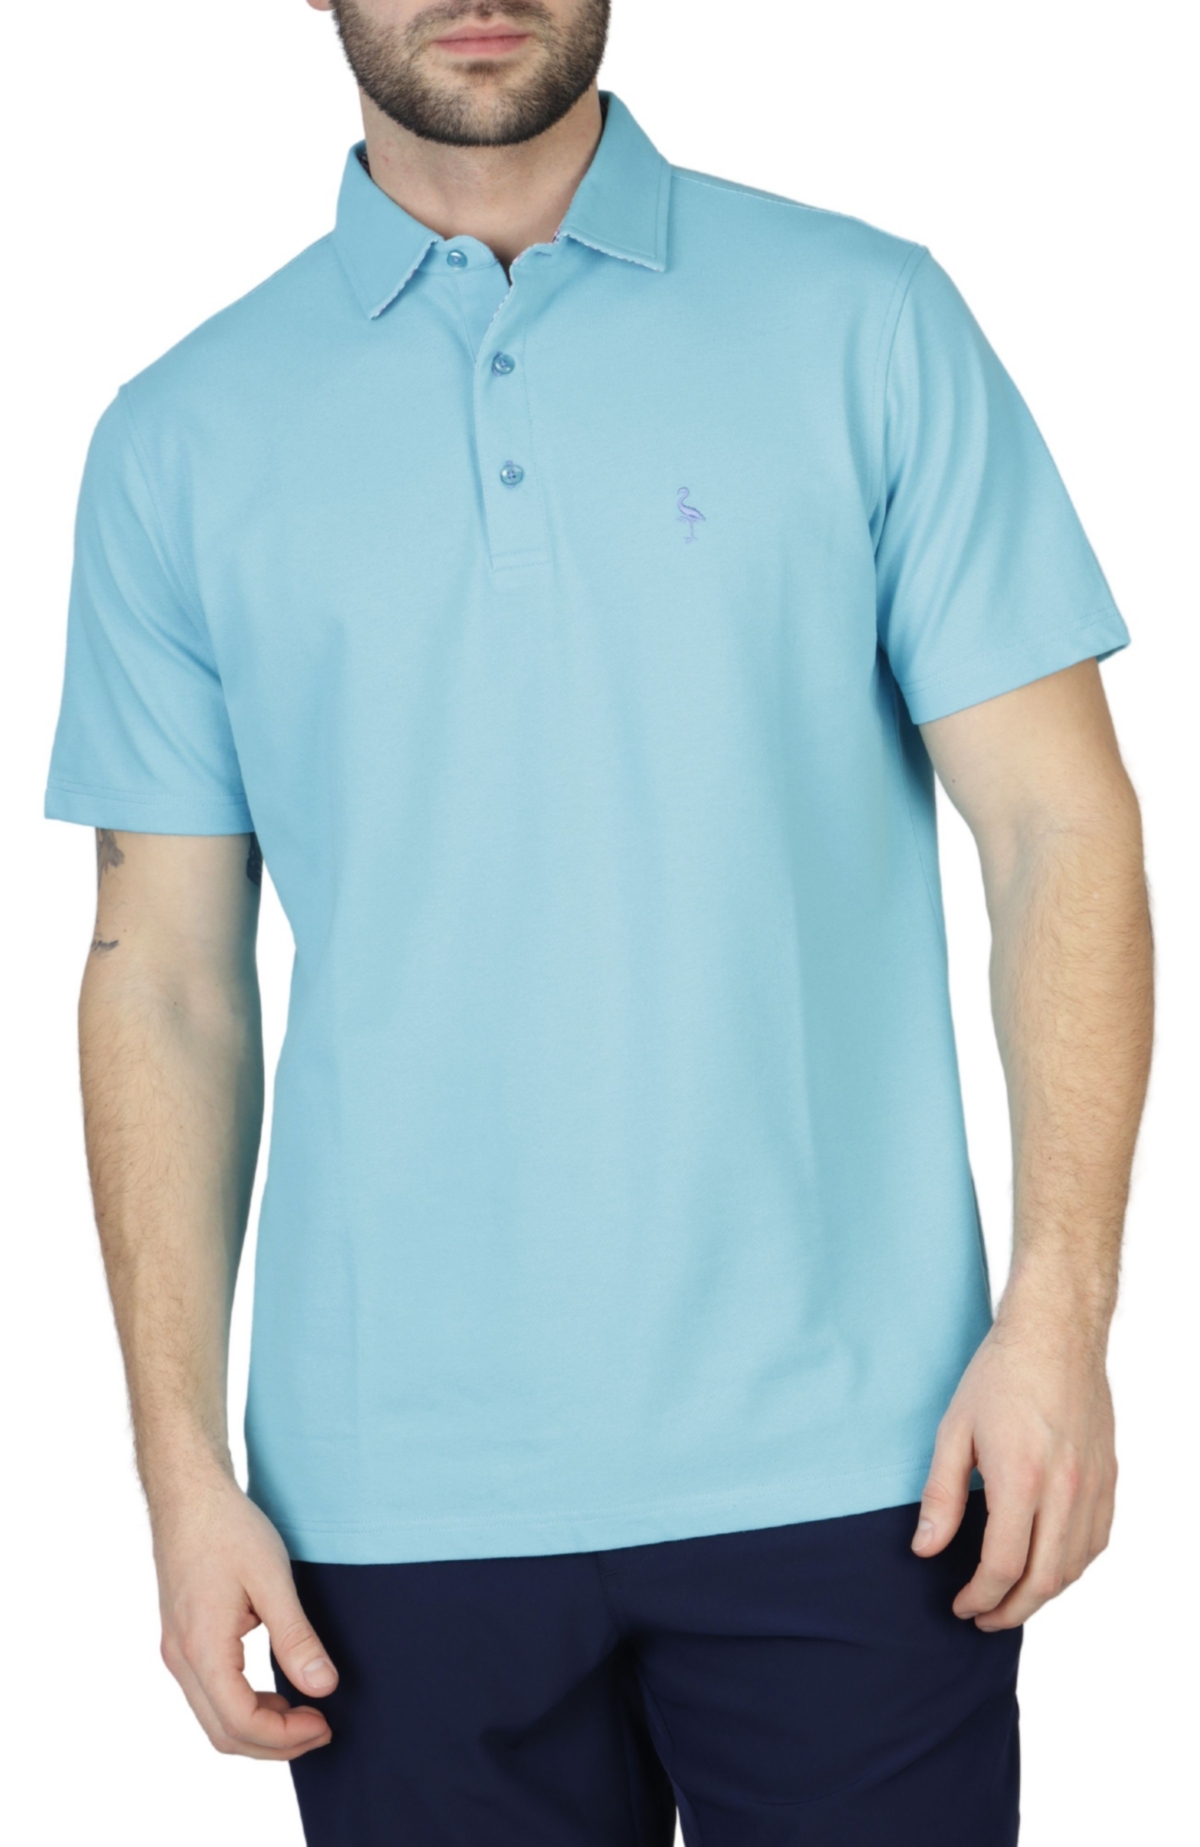 Men's Pique Polo Shirt with Multi Gingham Trim - White dove